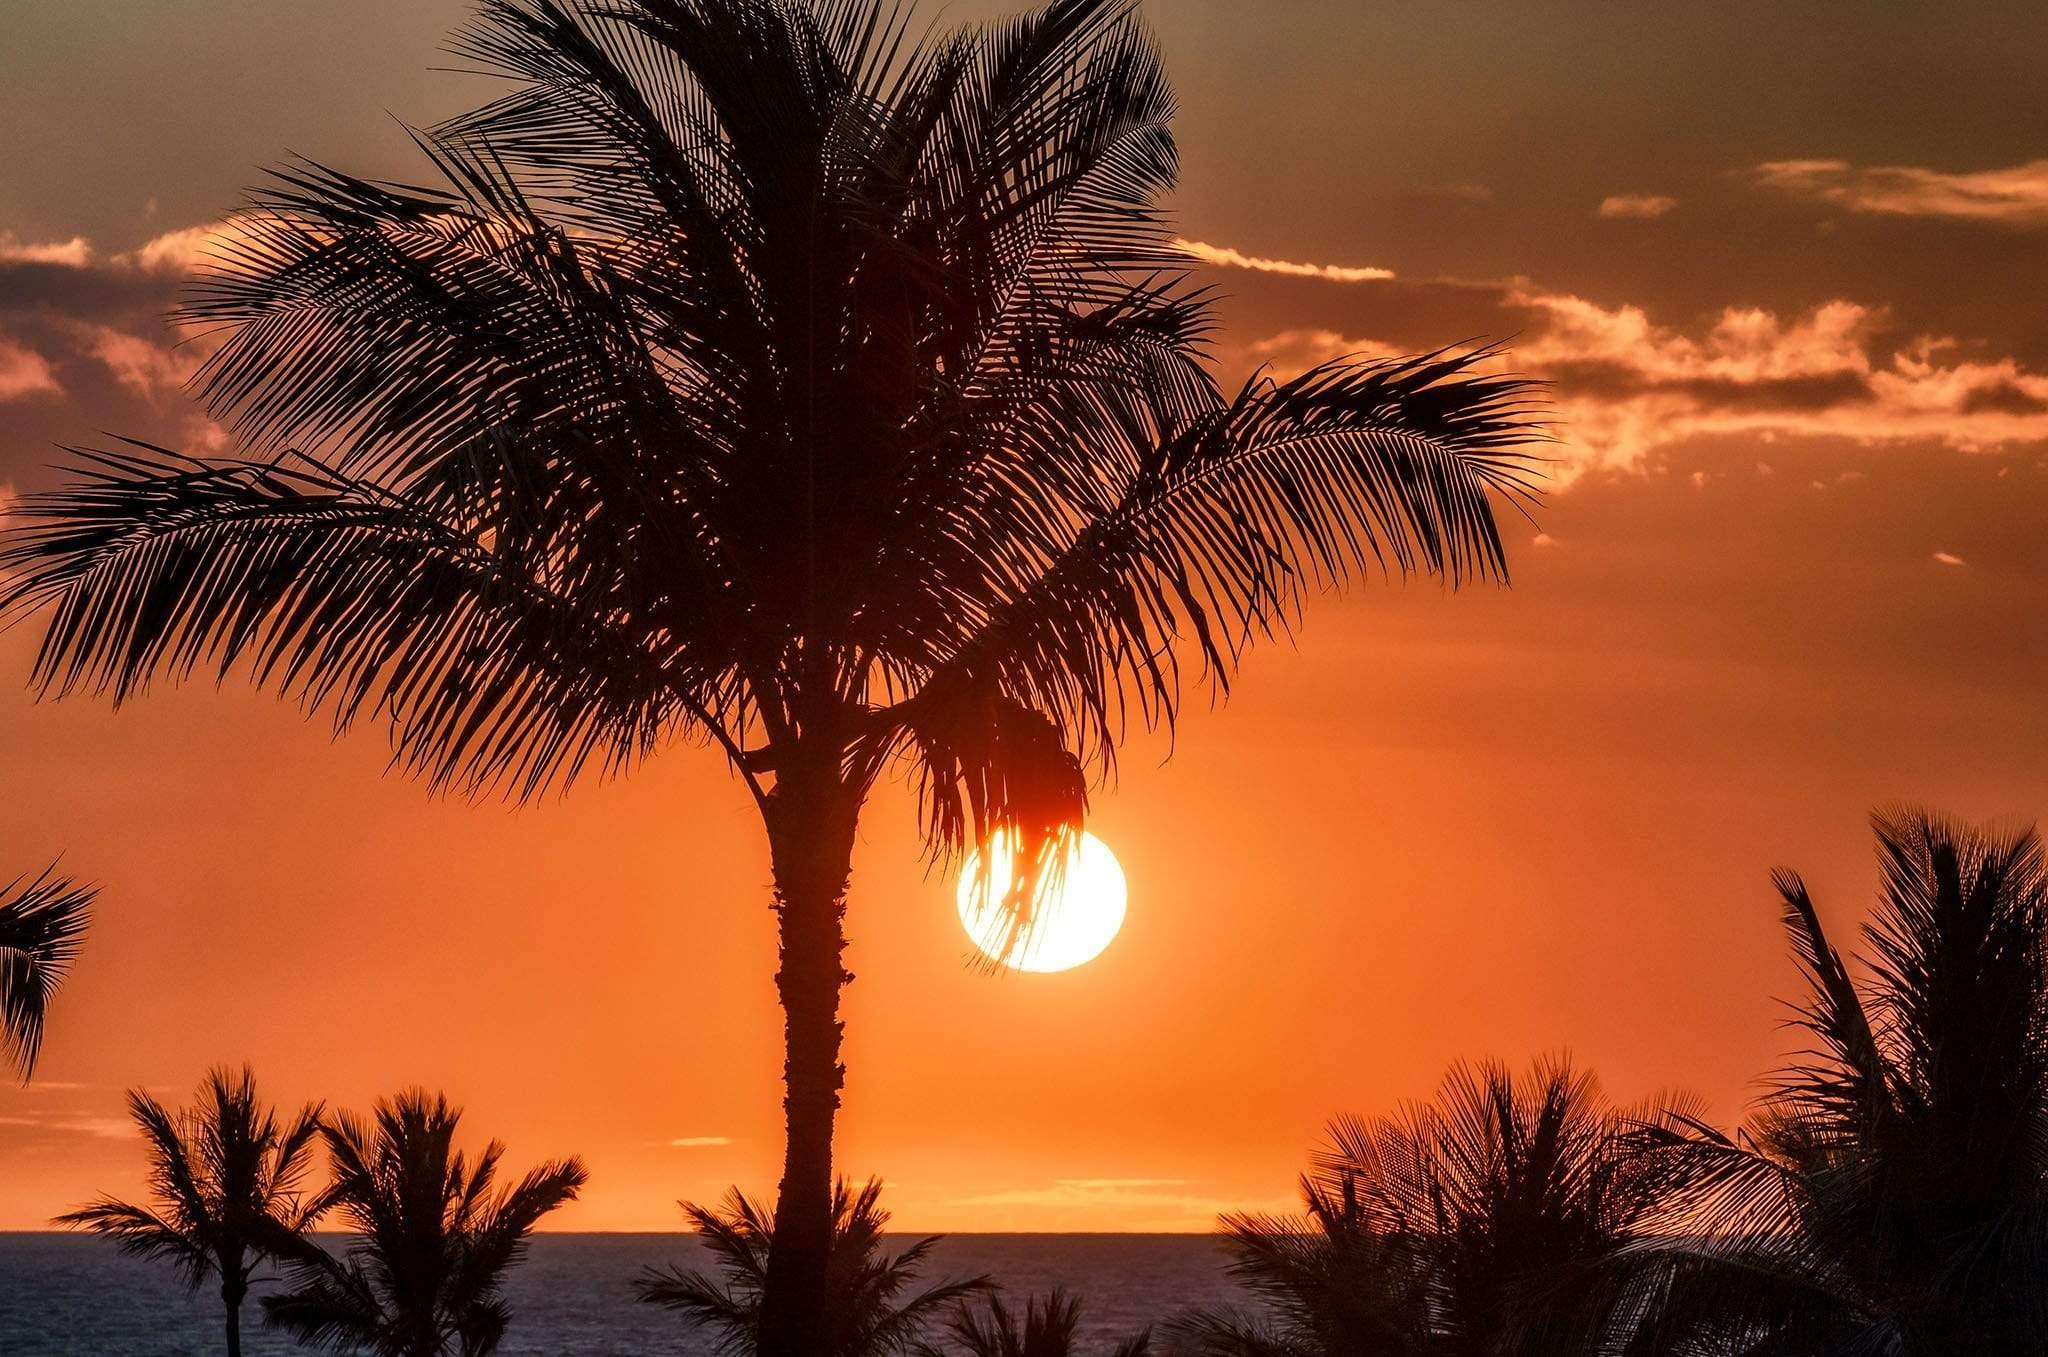 Orange Sunset with Palm Tree